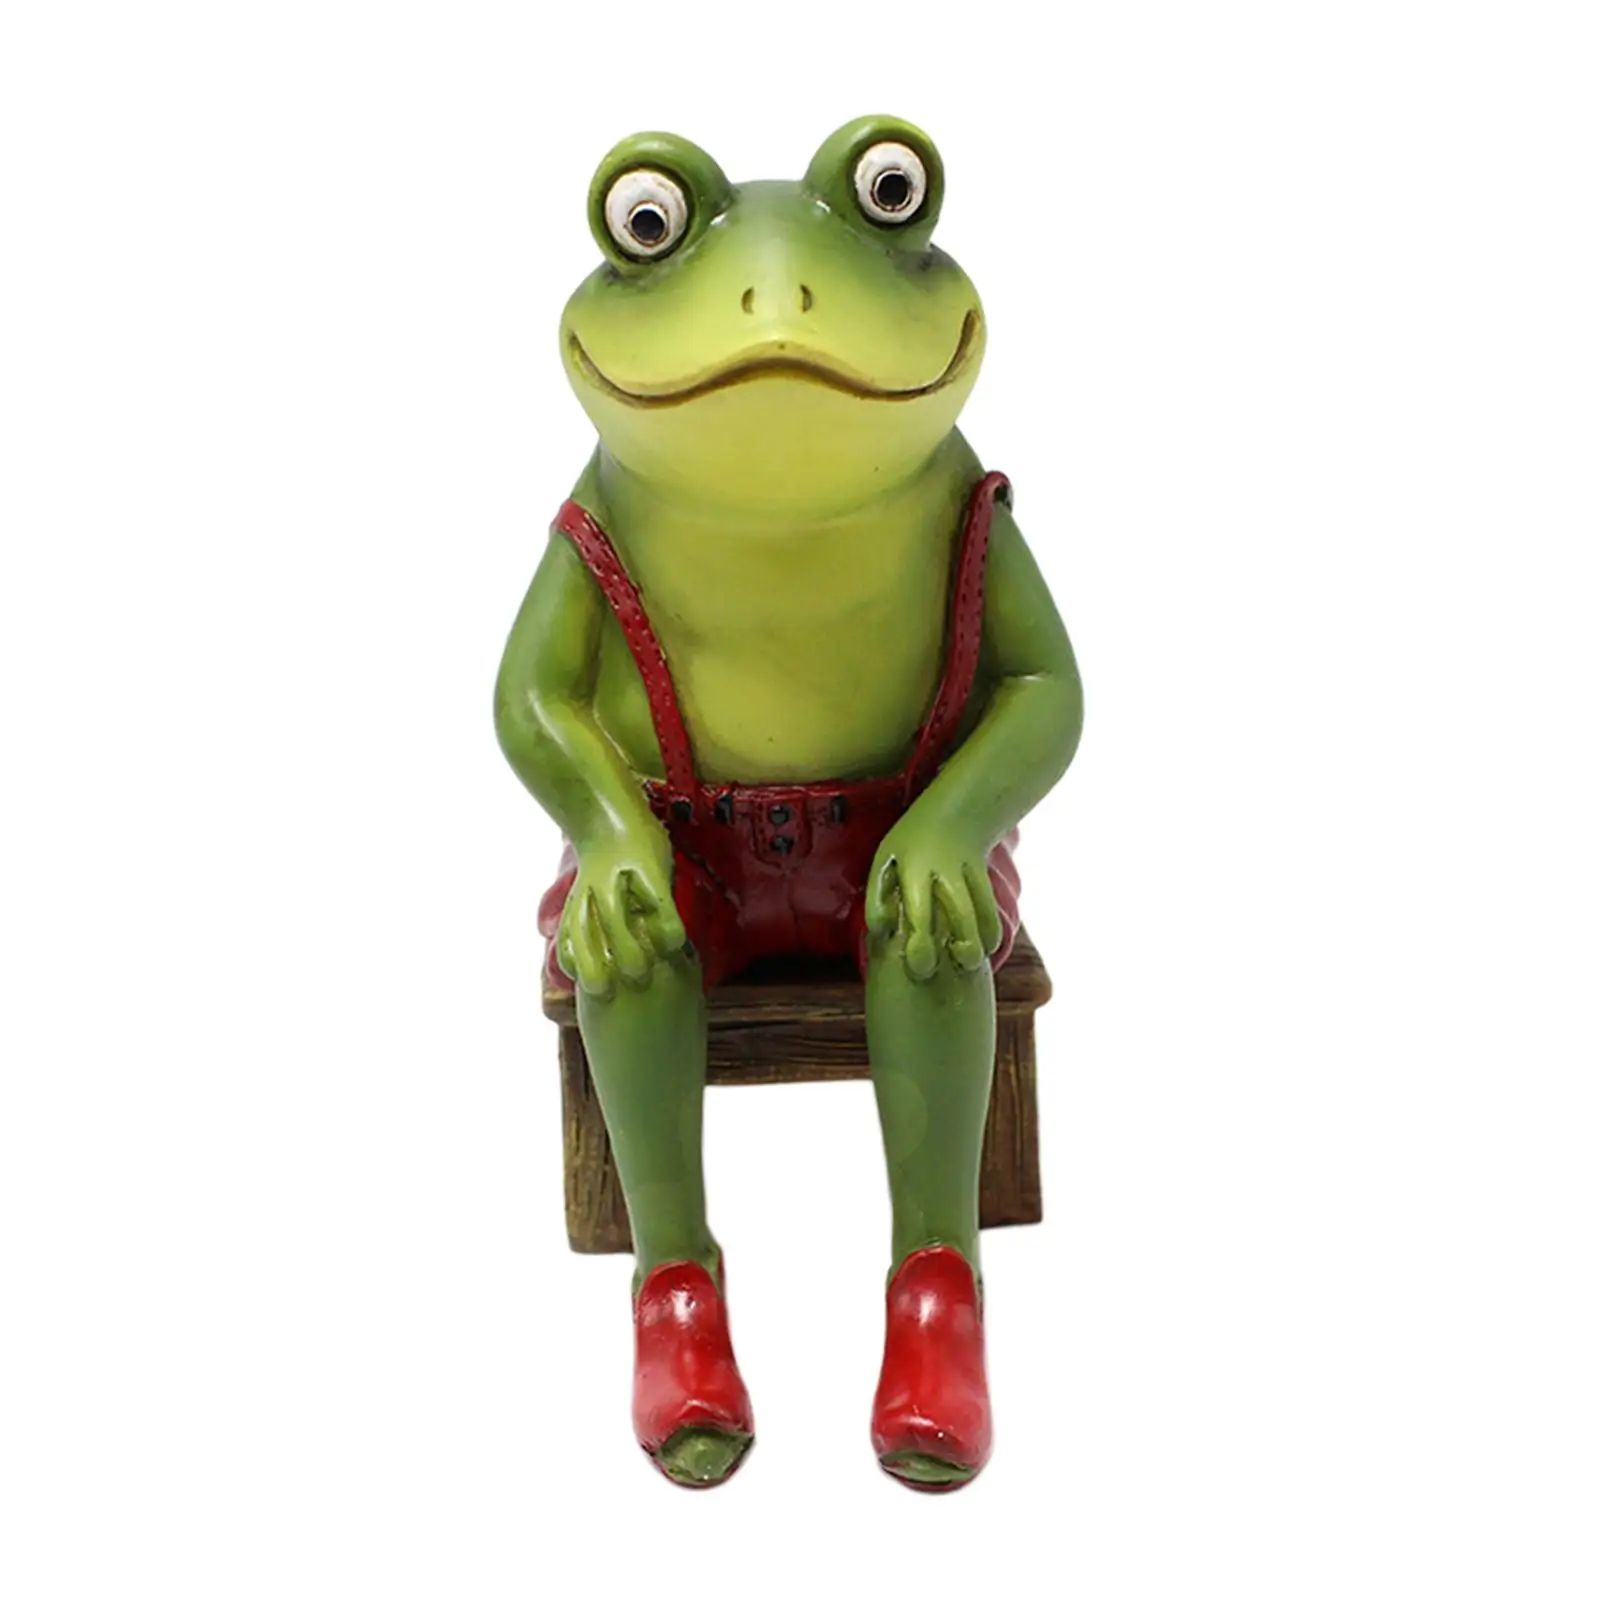 Novelty Frog Figurine Craft Sculpture for Tabletop Bedroom Decorations